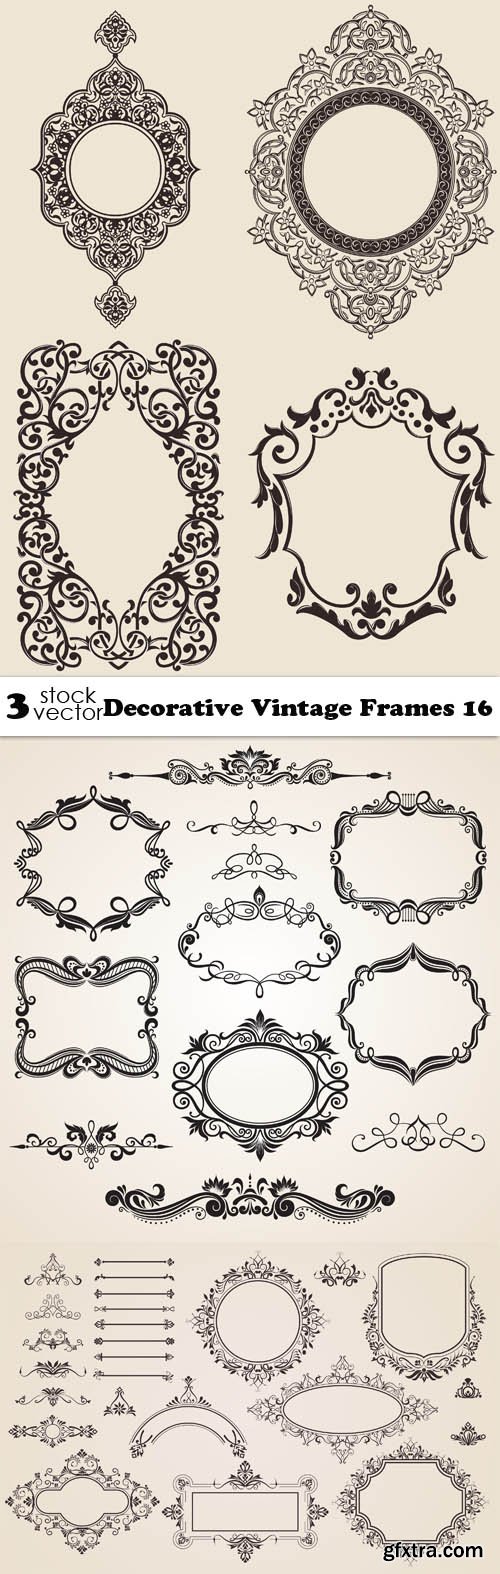 Vectors - Decorative Vintage Frames 16